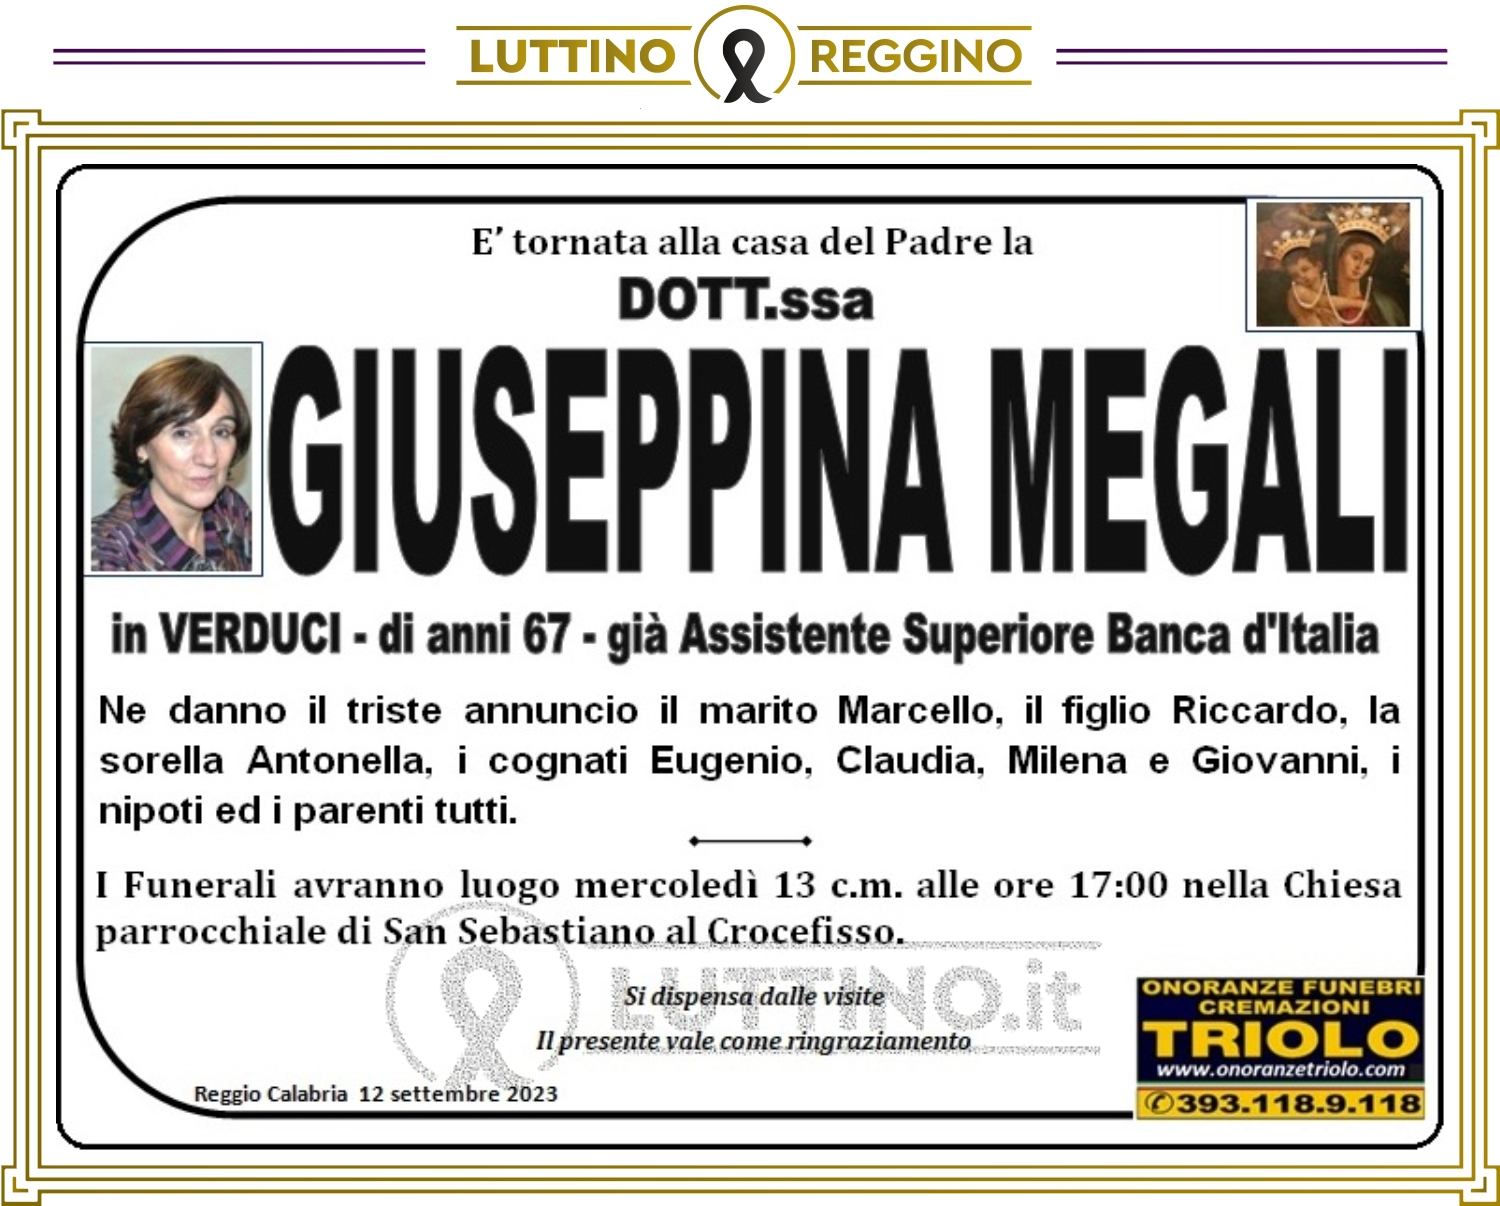 Giuseppina Megali